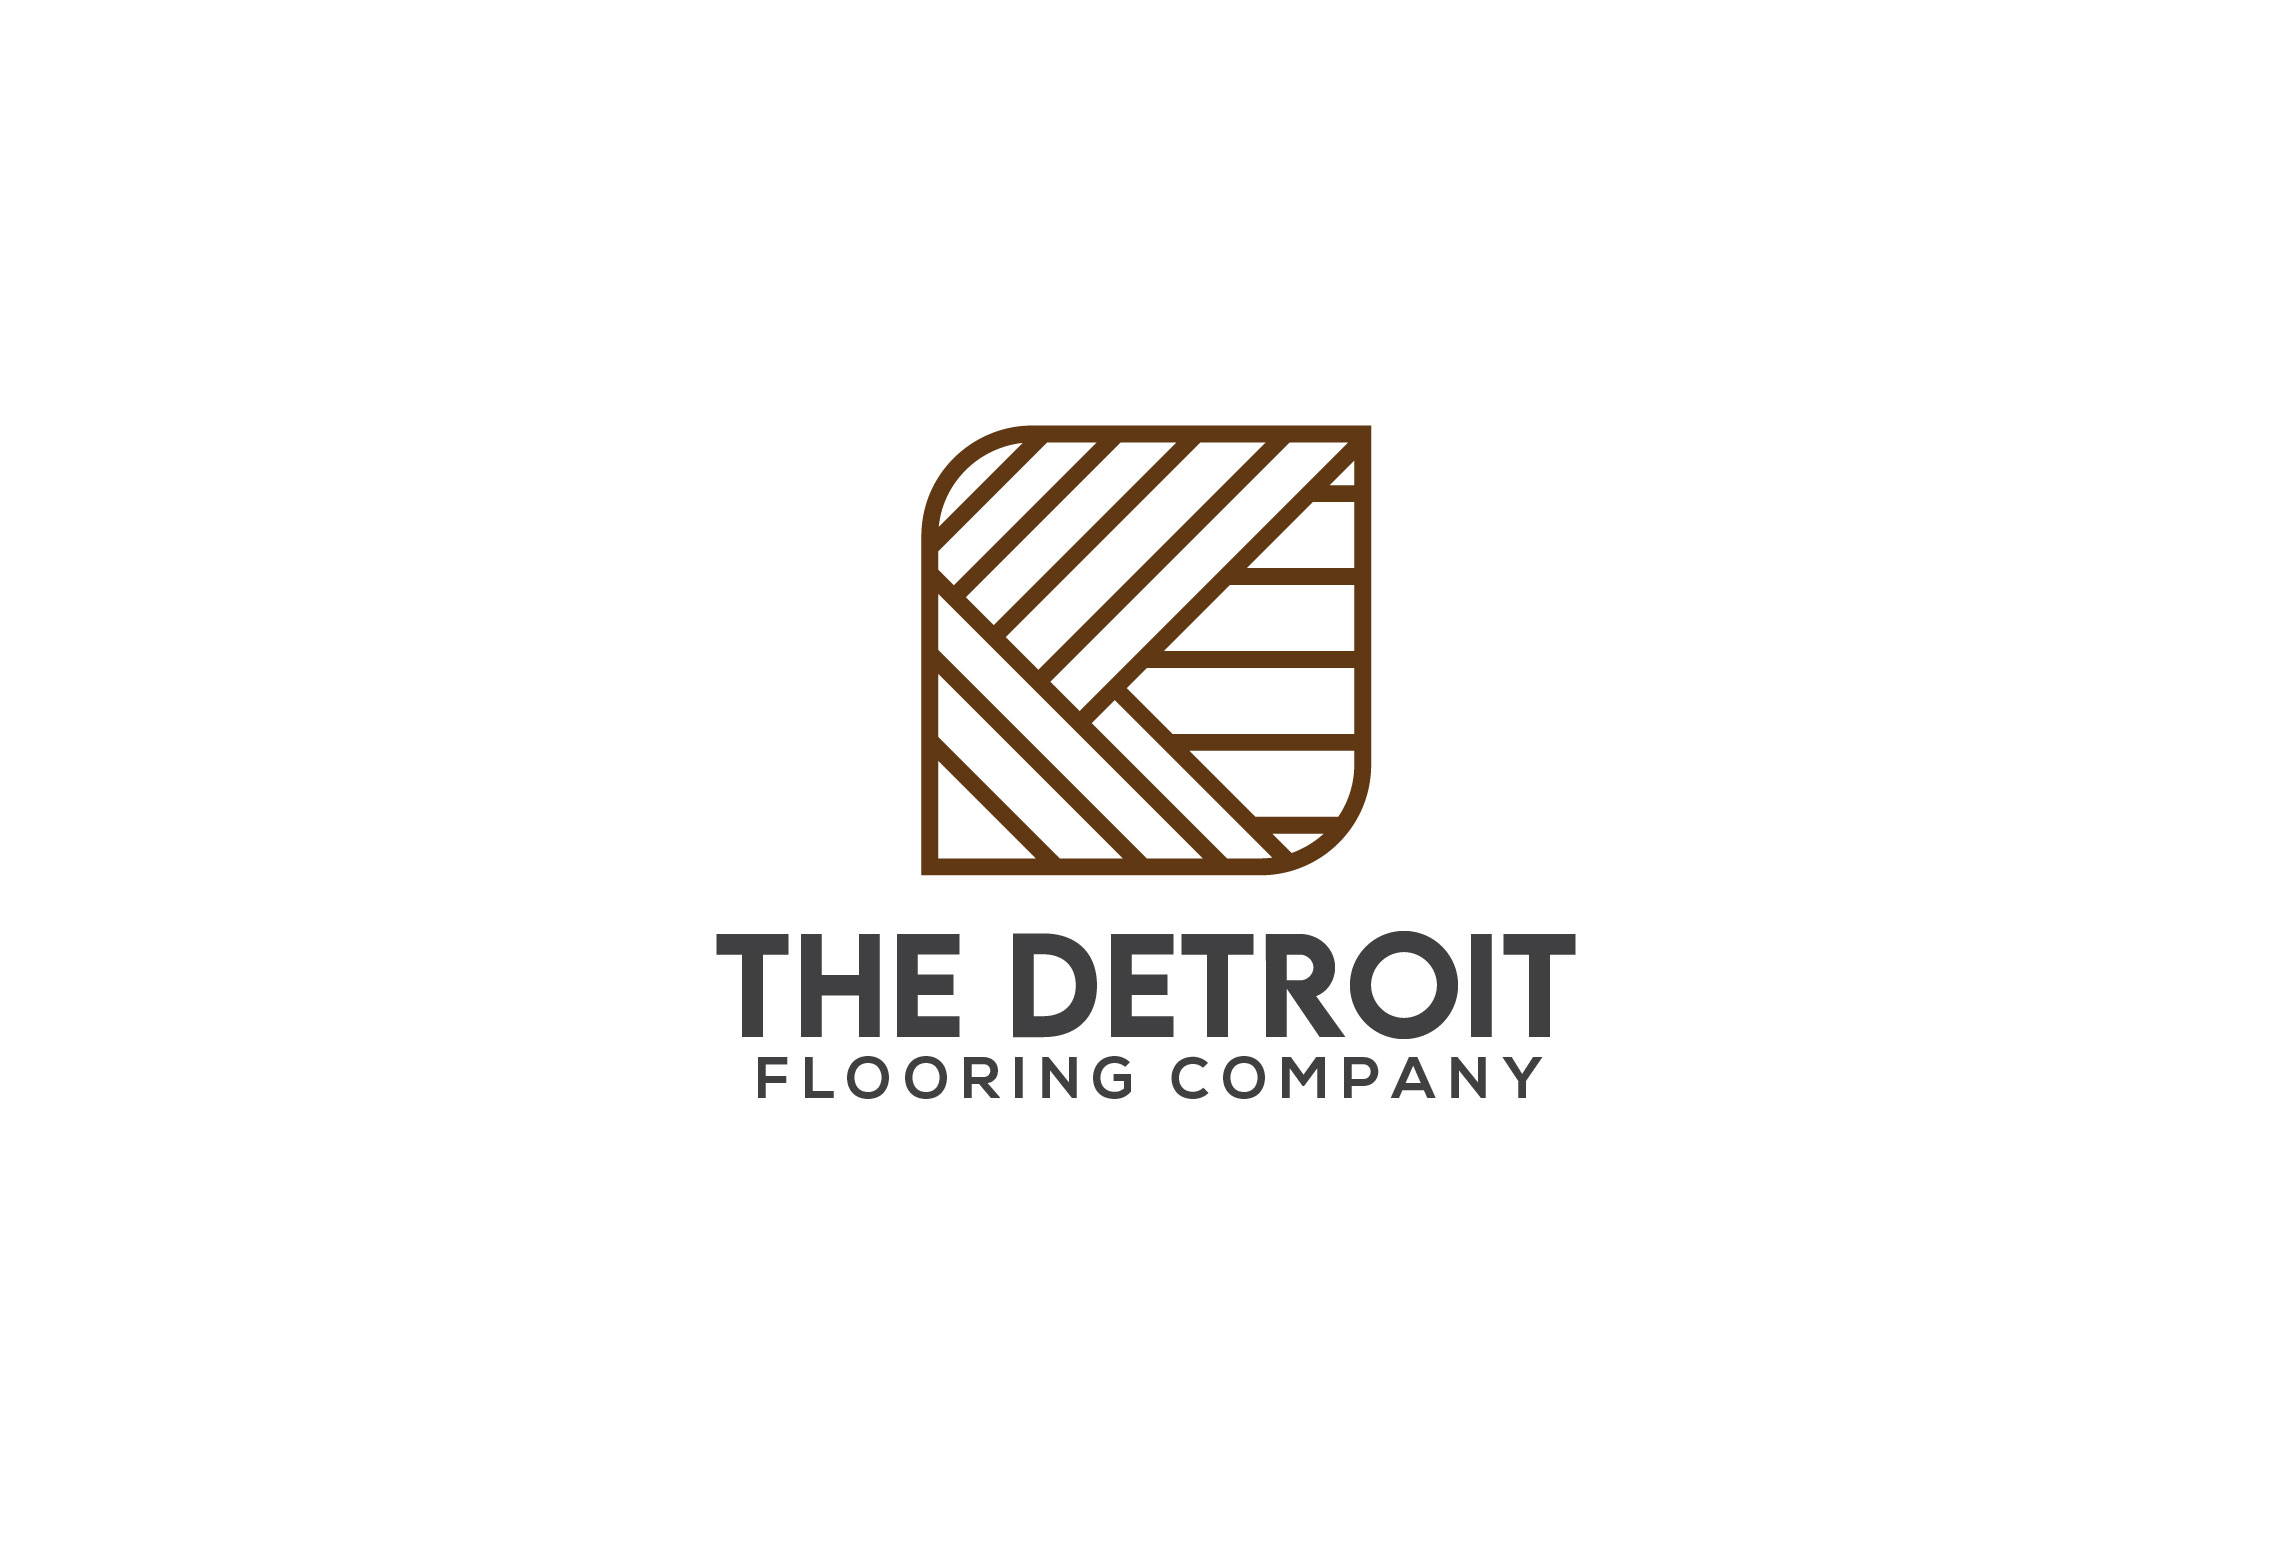 The Detroit Flooring Company